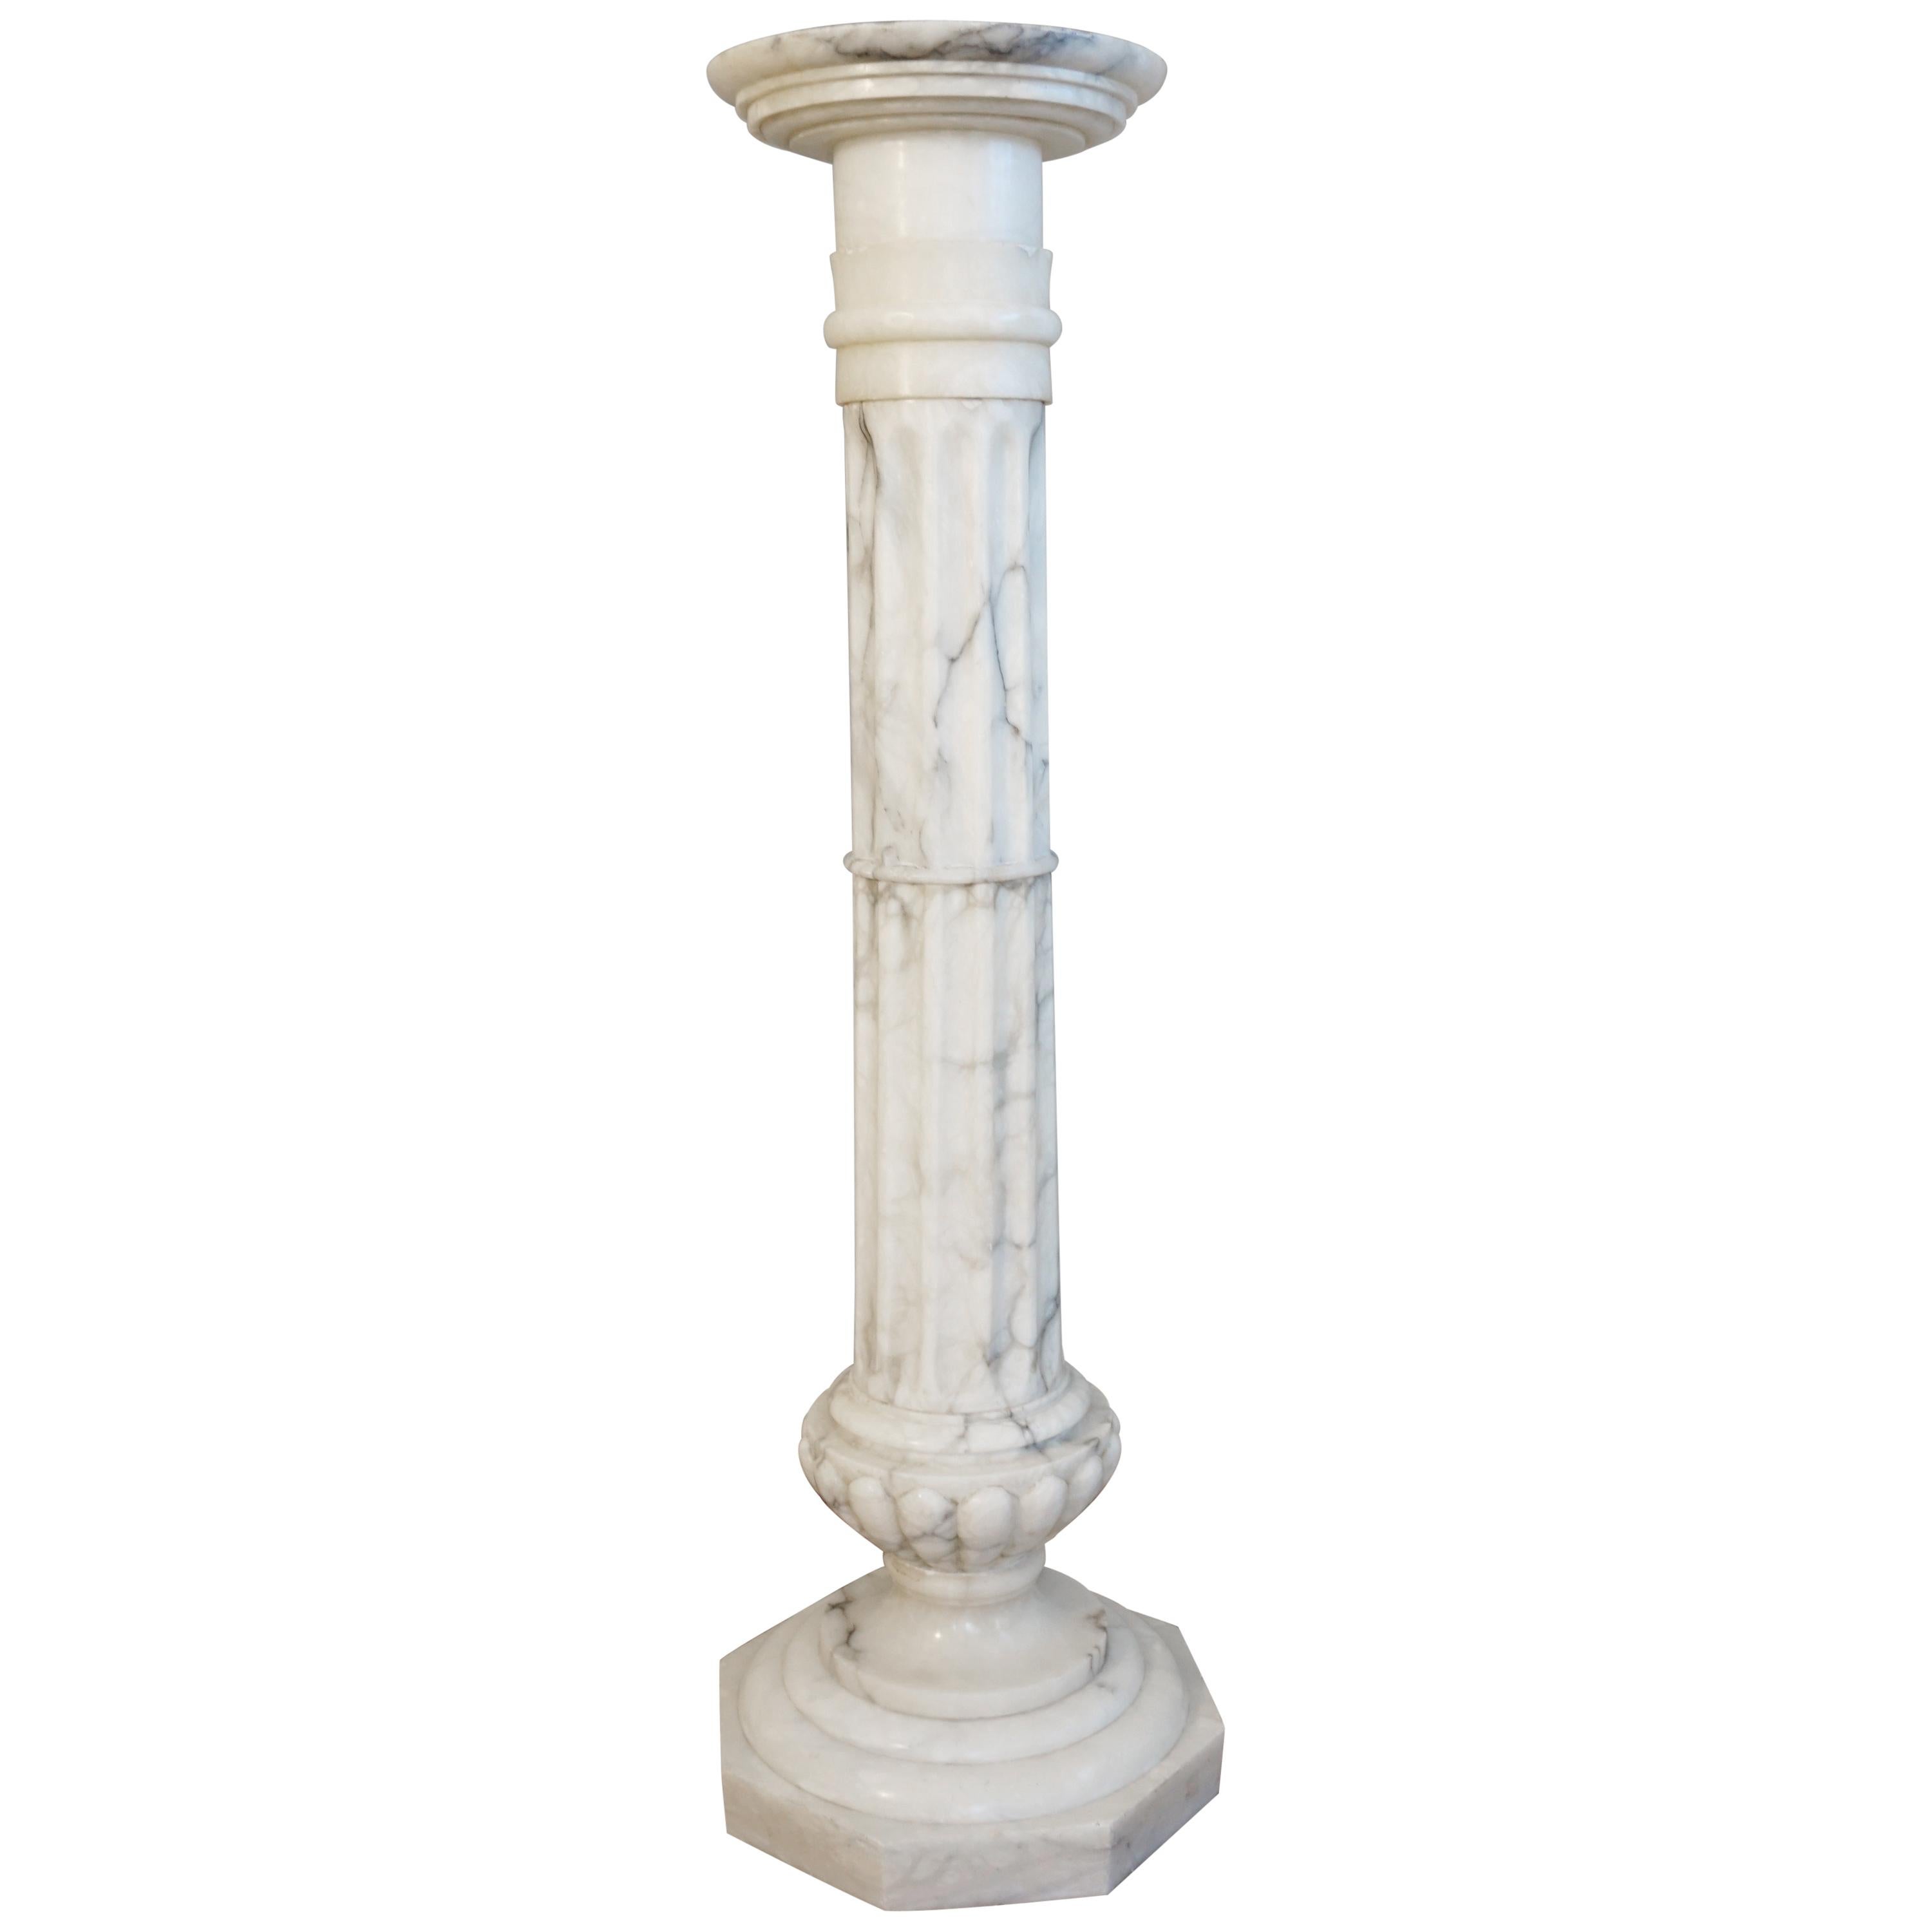 Stylish Early Twentieth Century Roman Classical Alabaster Column Pedestal Stand